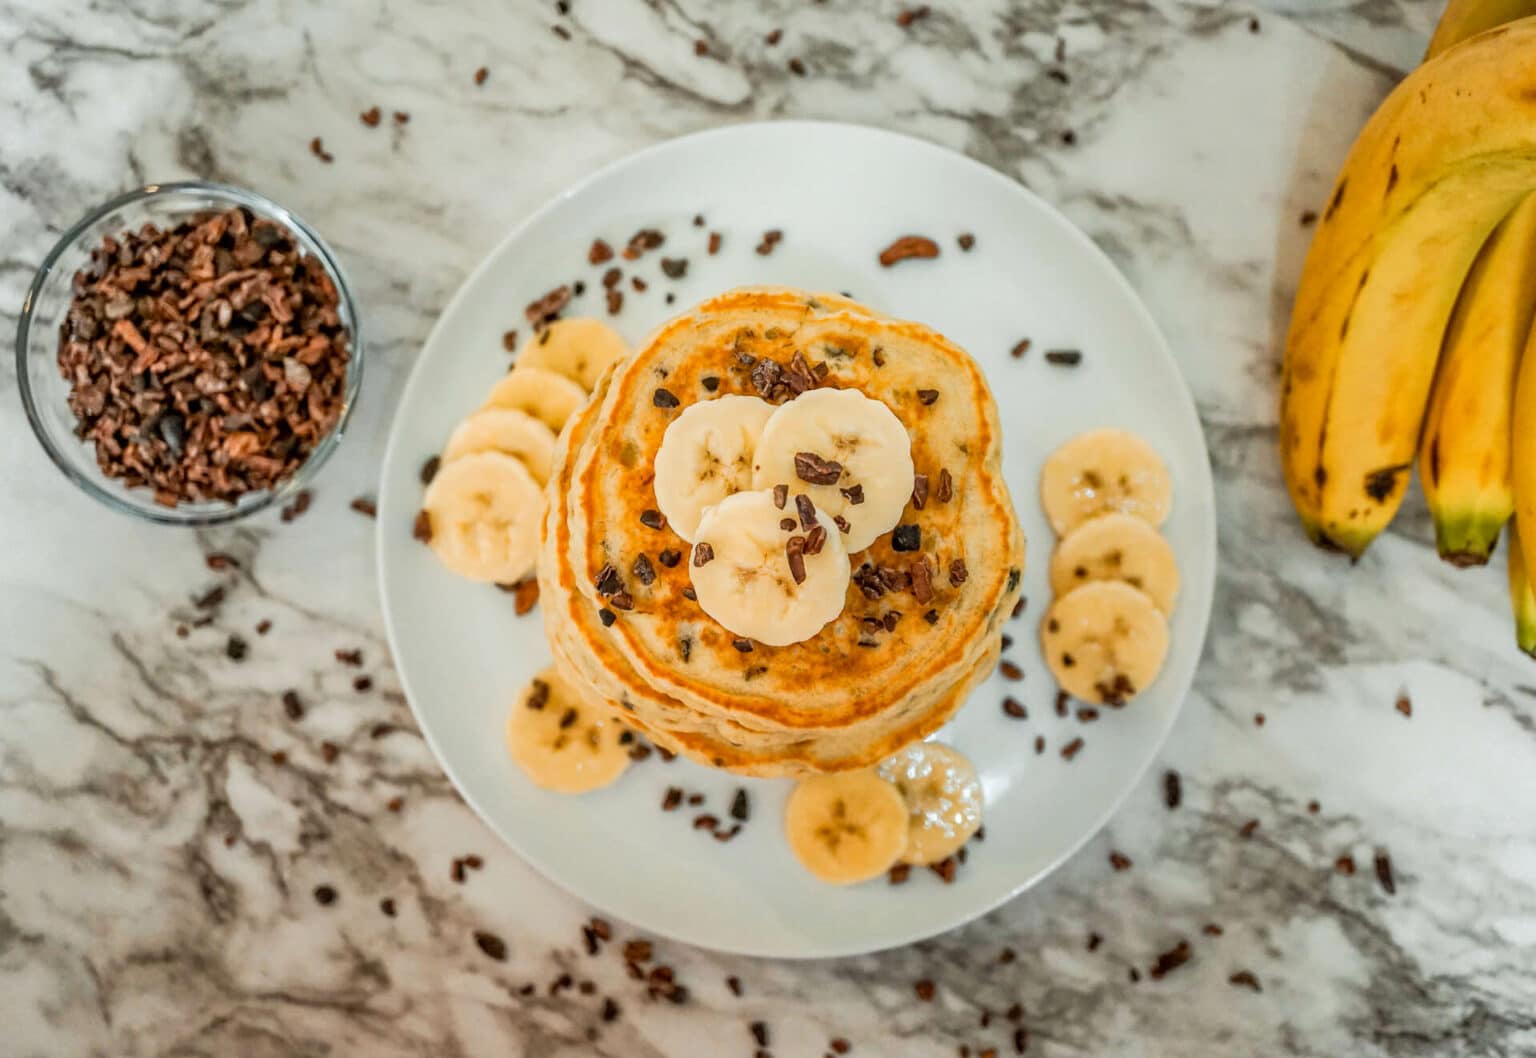 Healthy Banana Cacao Nib Pancakes - A Superfood Recipe!